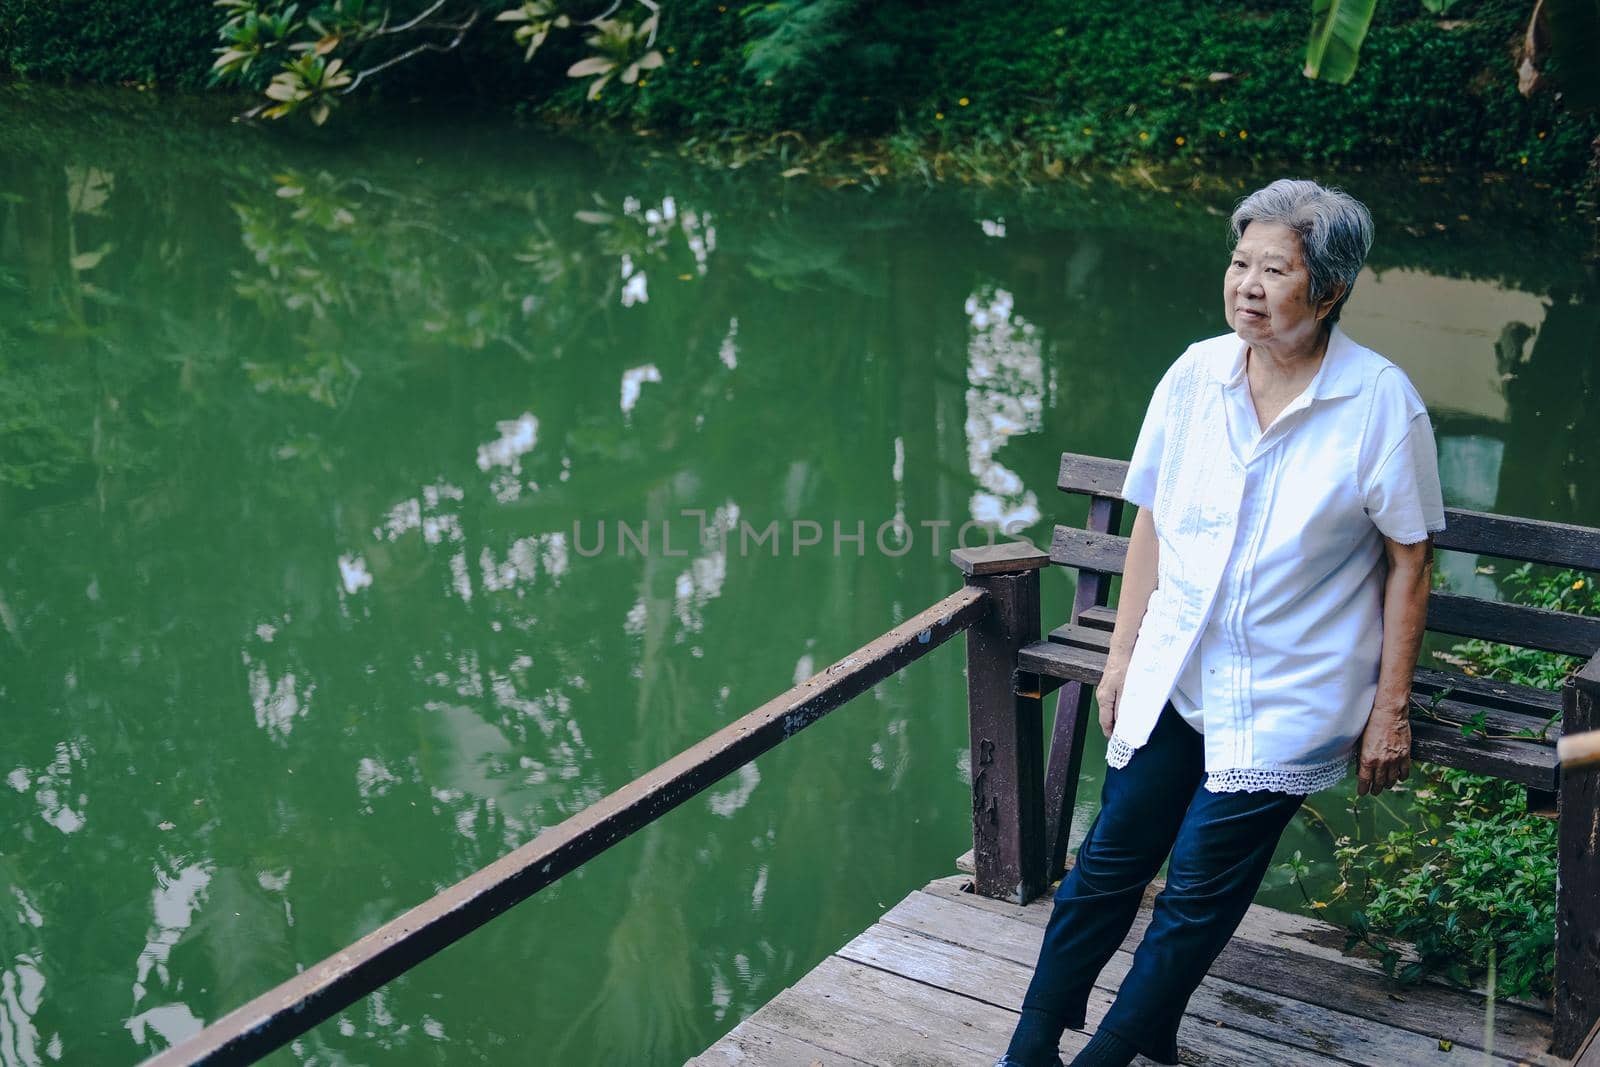 old elder woman resting near pond. asian elderly female relaxing outdoors. senior leisure lifestyle